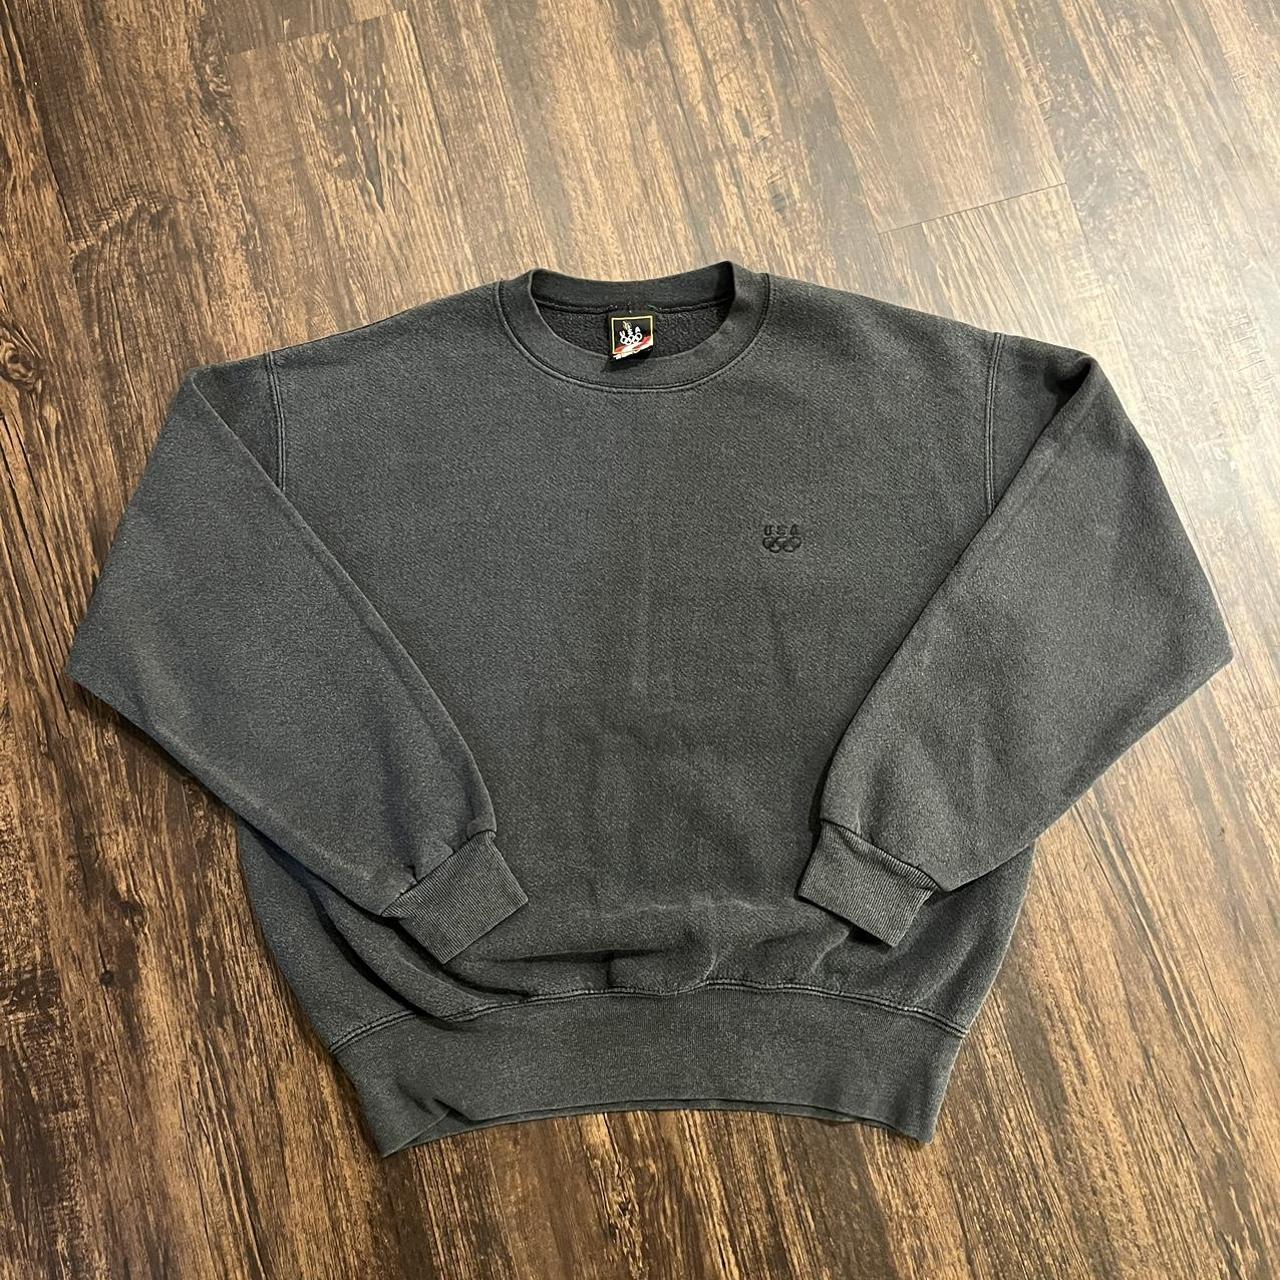 JCPenney Men's Grey Sweatshirt | Depop